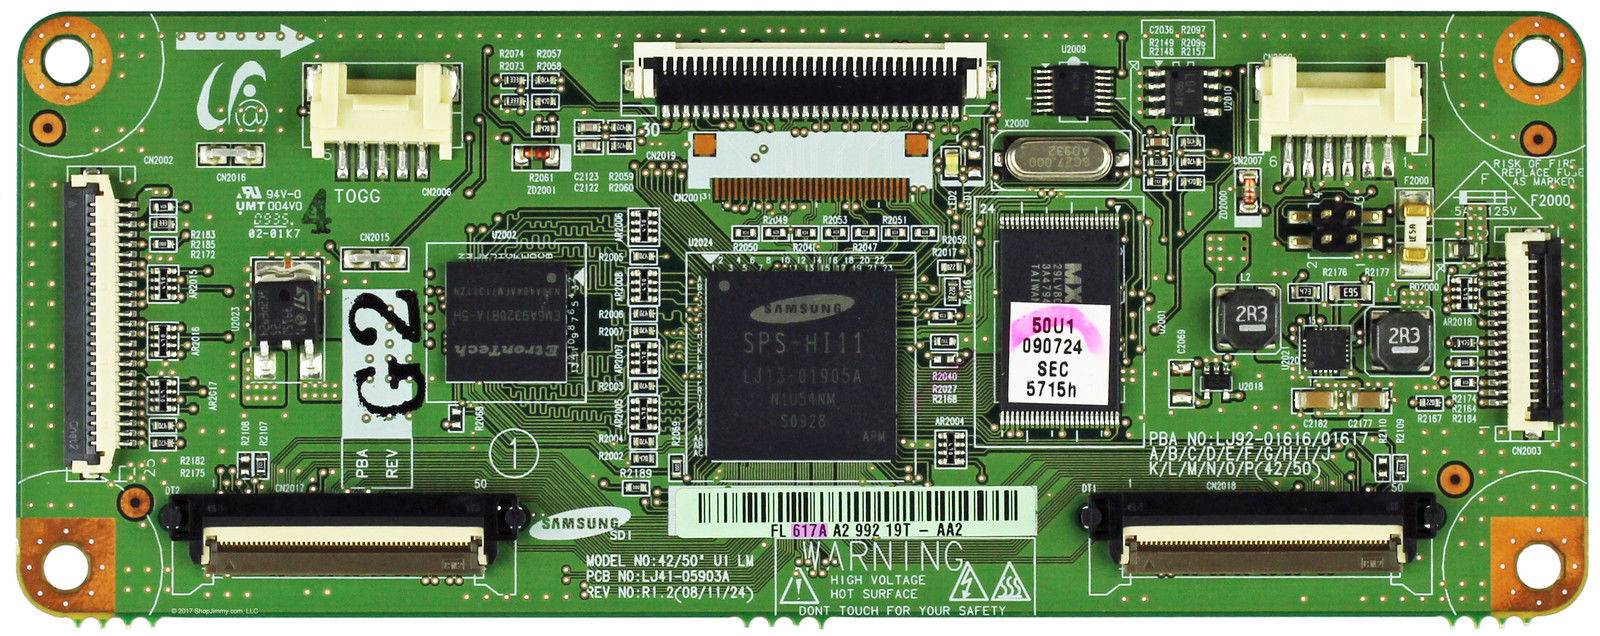 Samsung BN96-09739A (LJ92-01617A) Main Logic CTRL Board tested